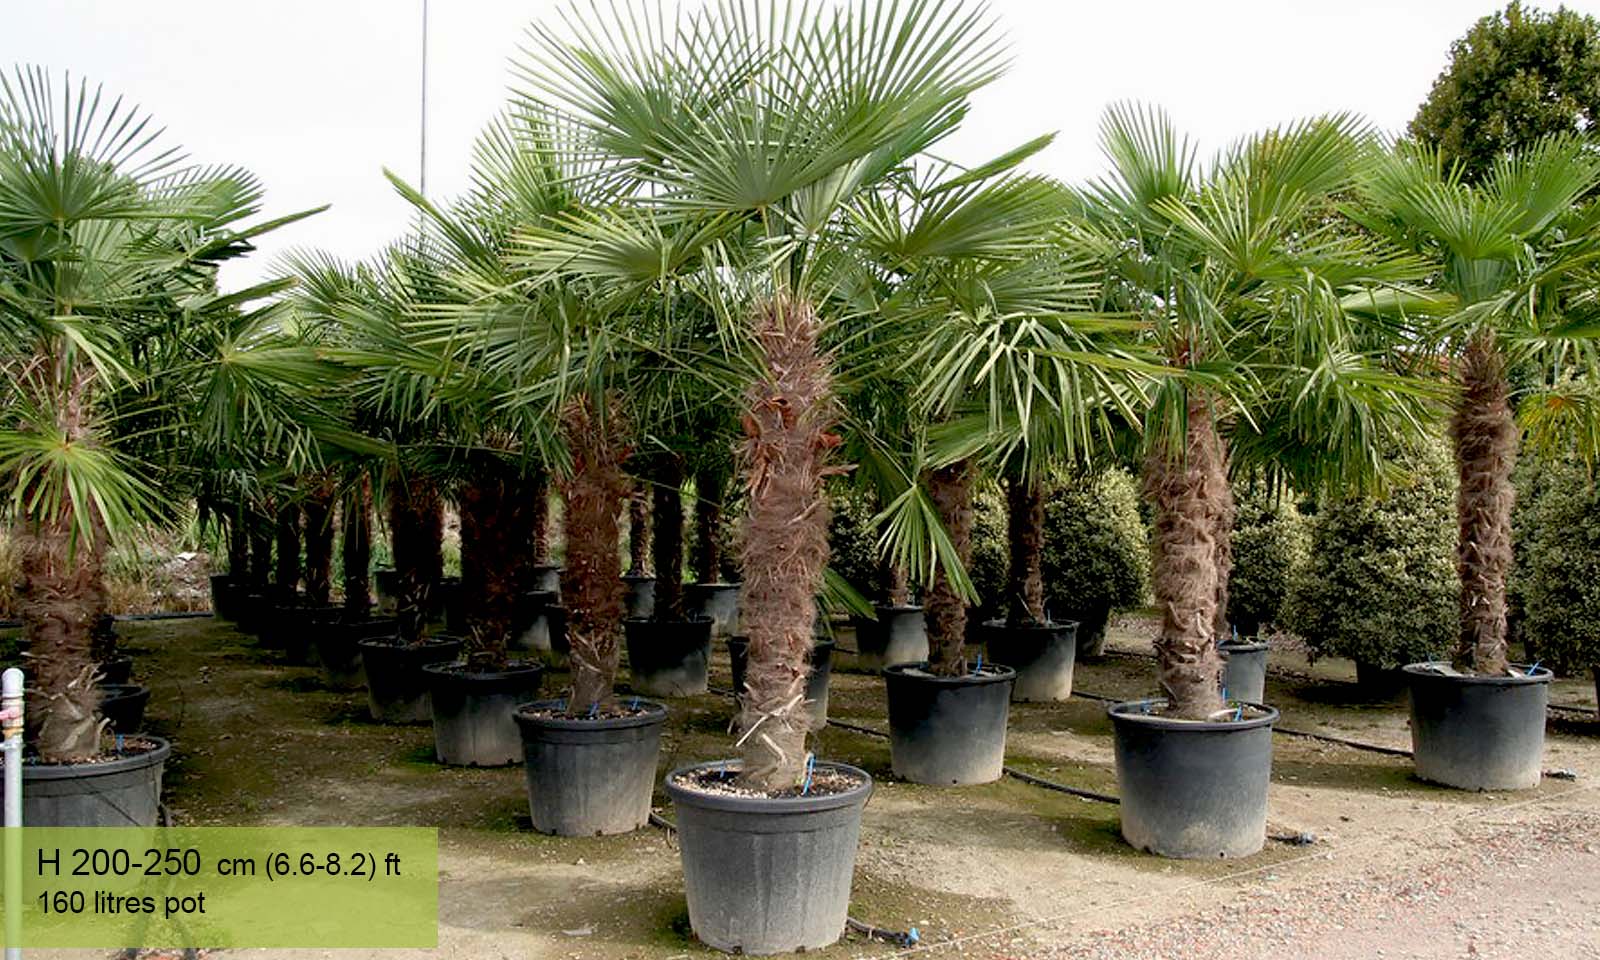 Chamaerops Excelsa / Trachycarpus Fortunei (Chusan Palm)